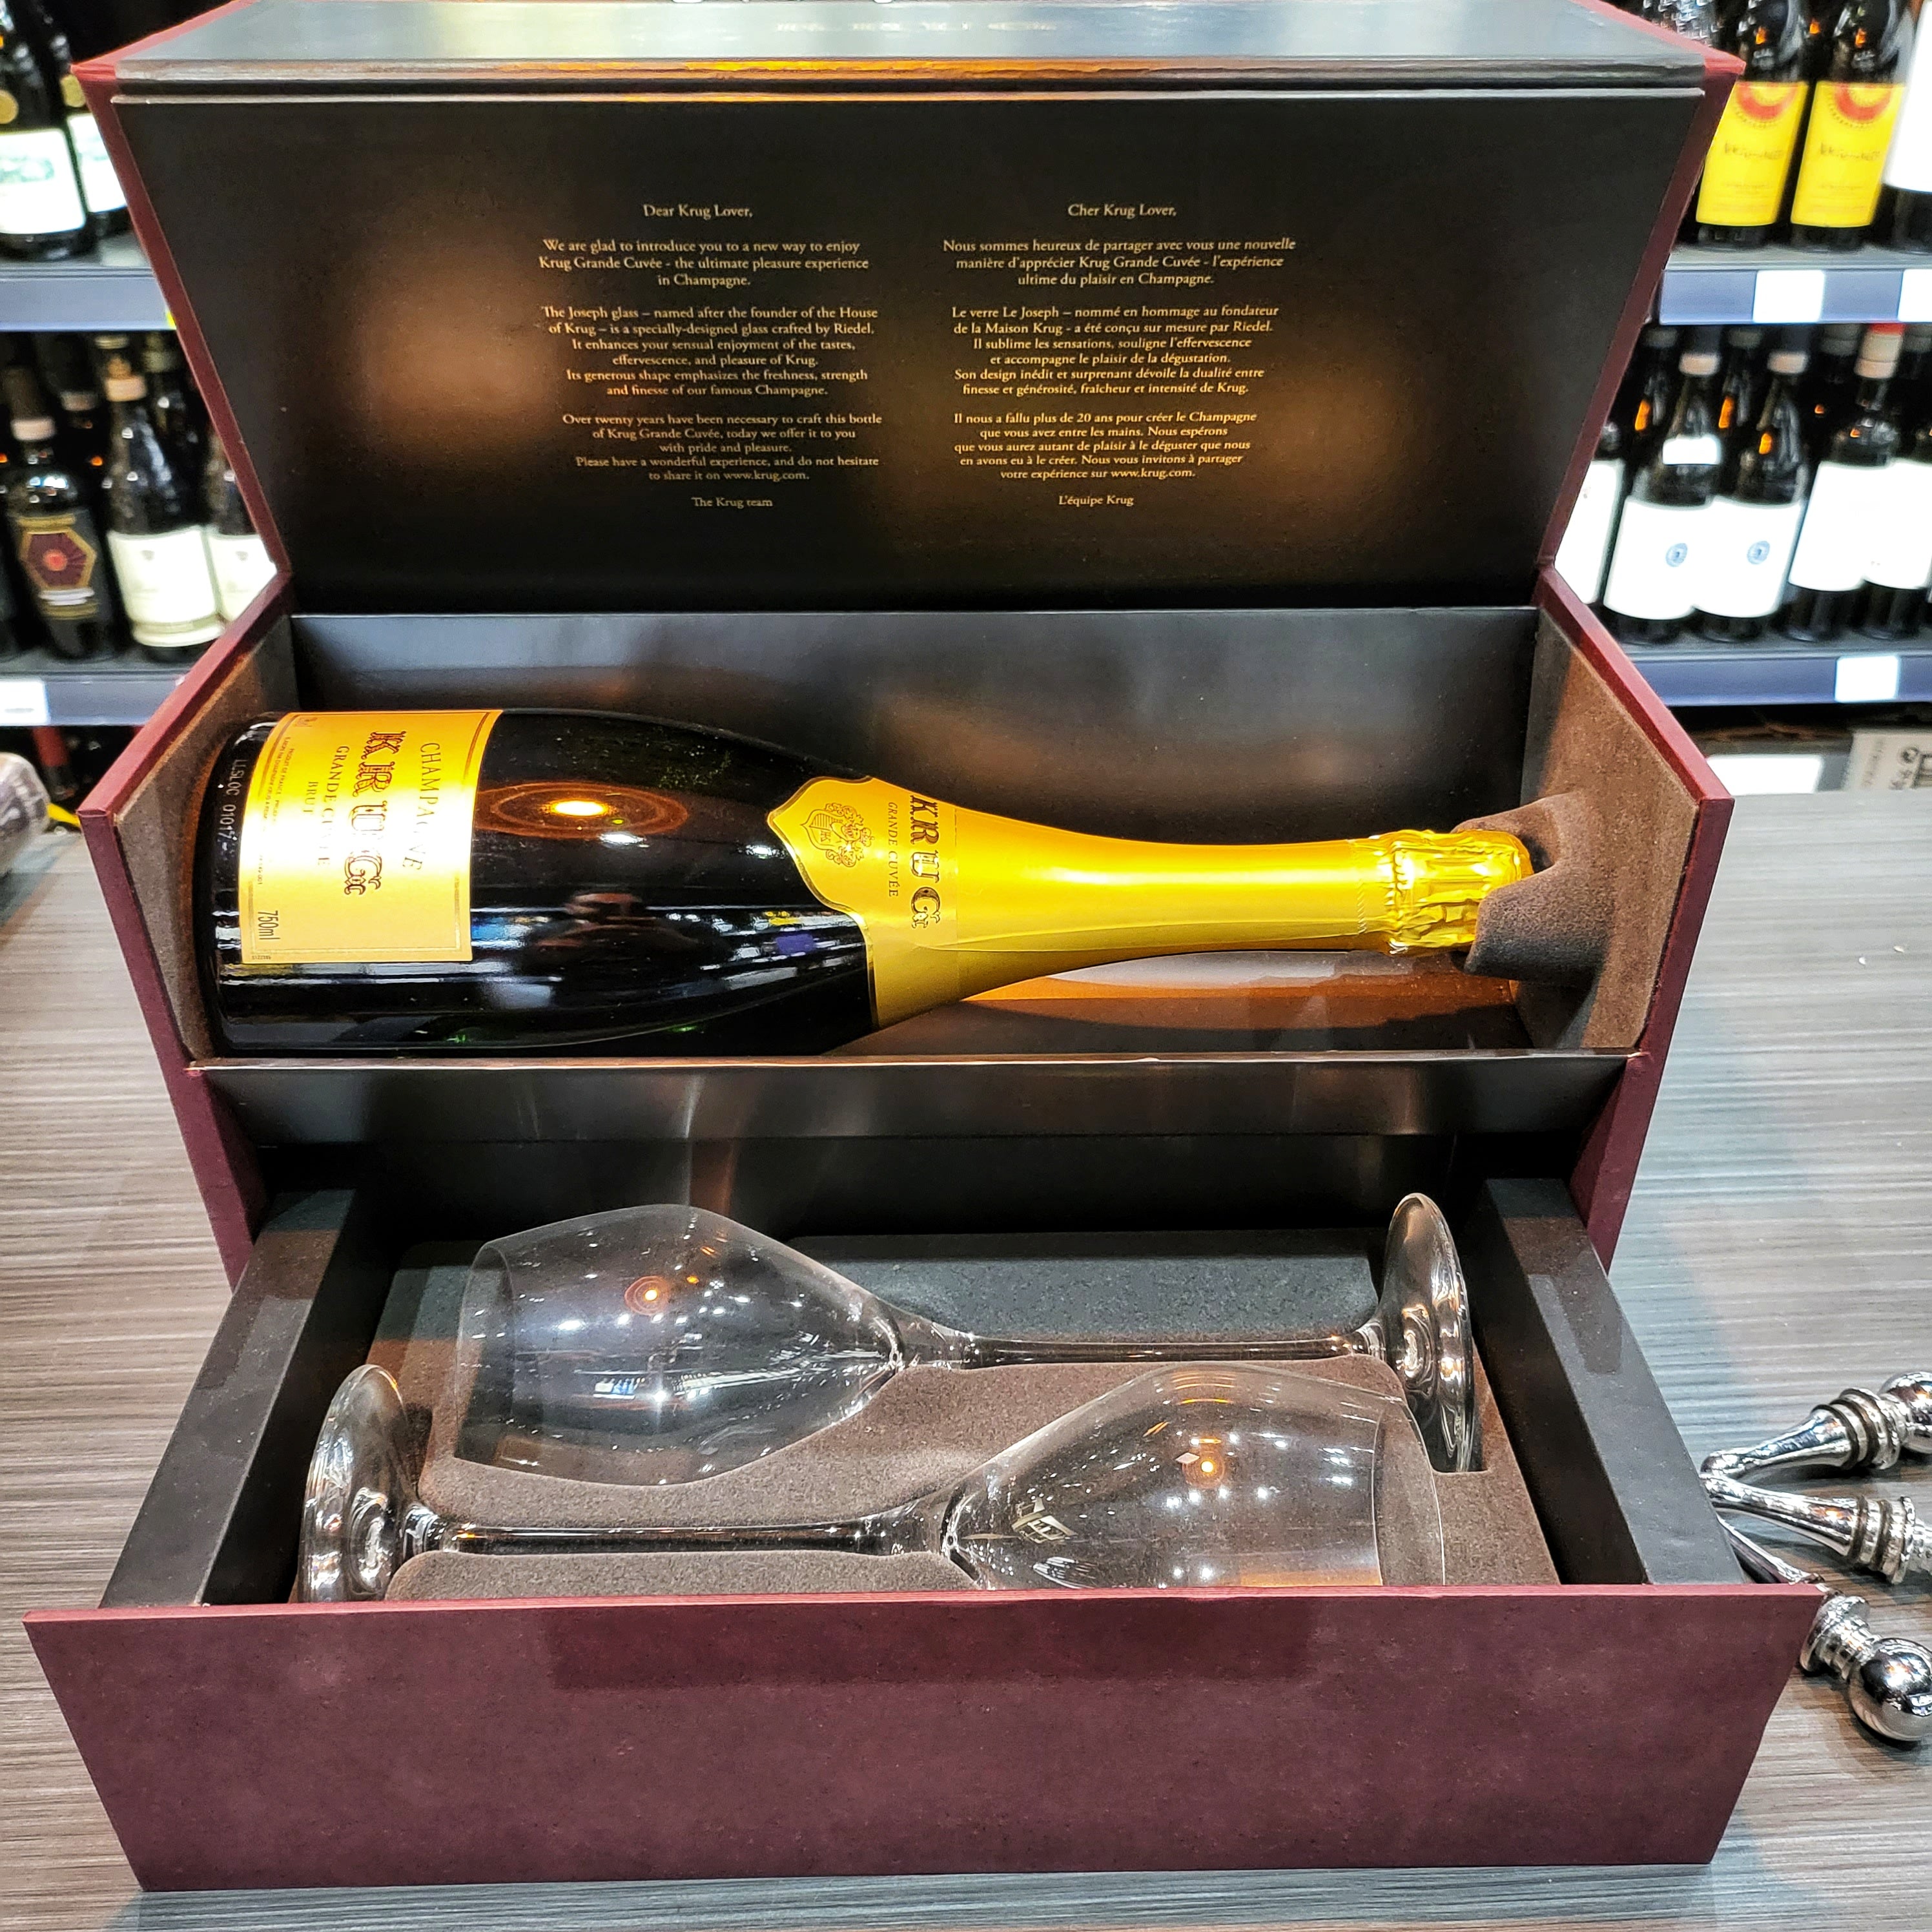 Krug Grande Cuvée Champagne Giftbox + 2 glasses